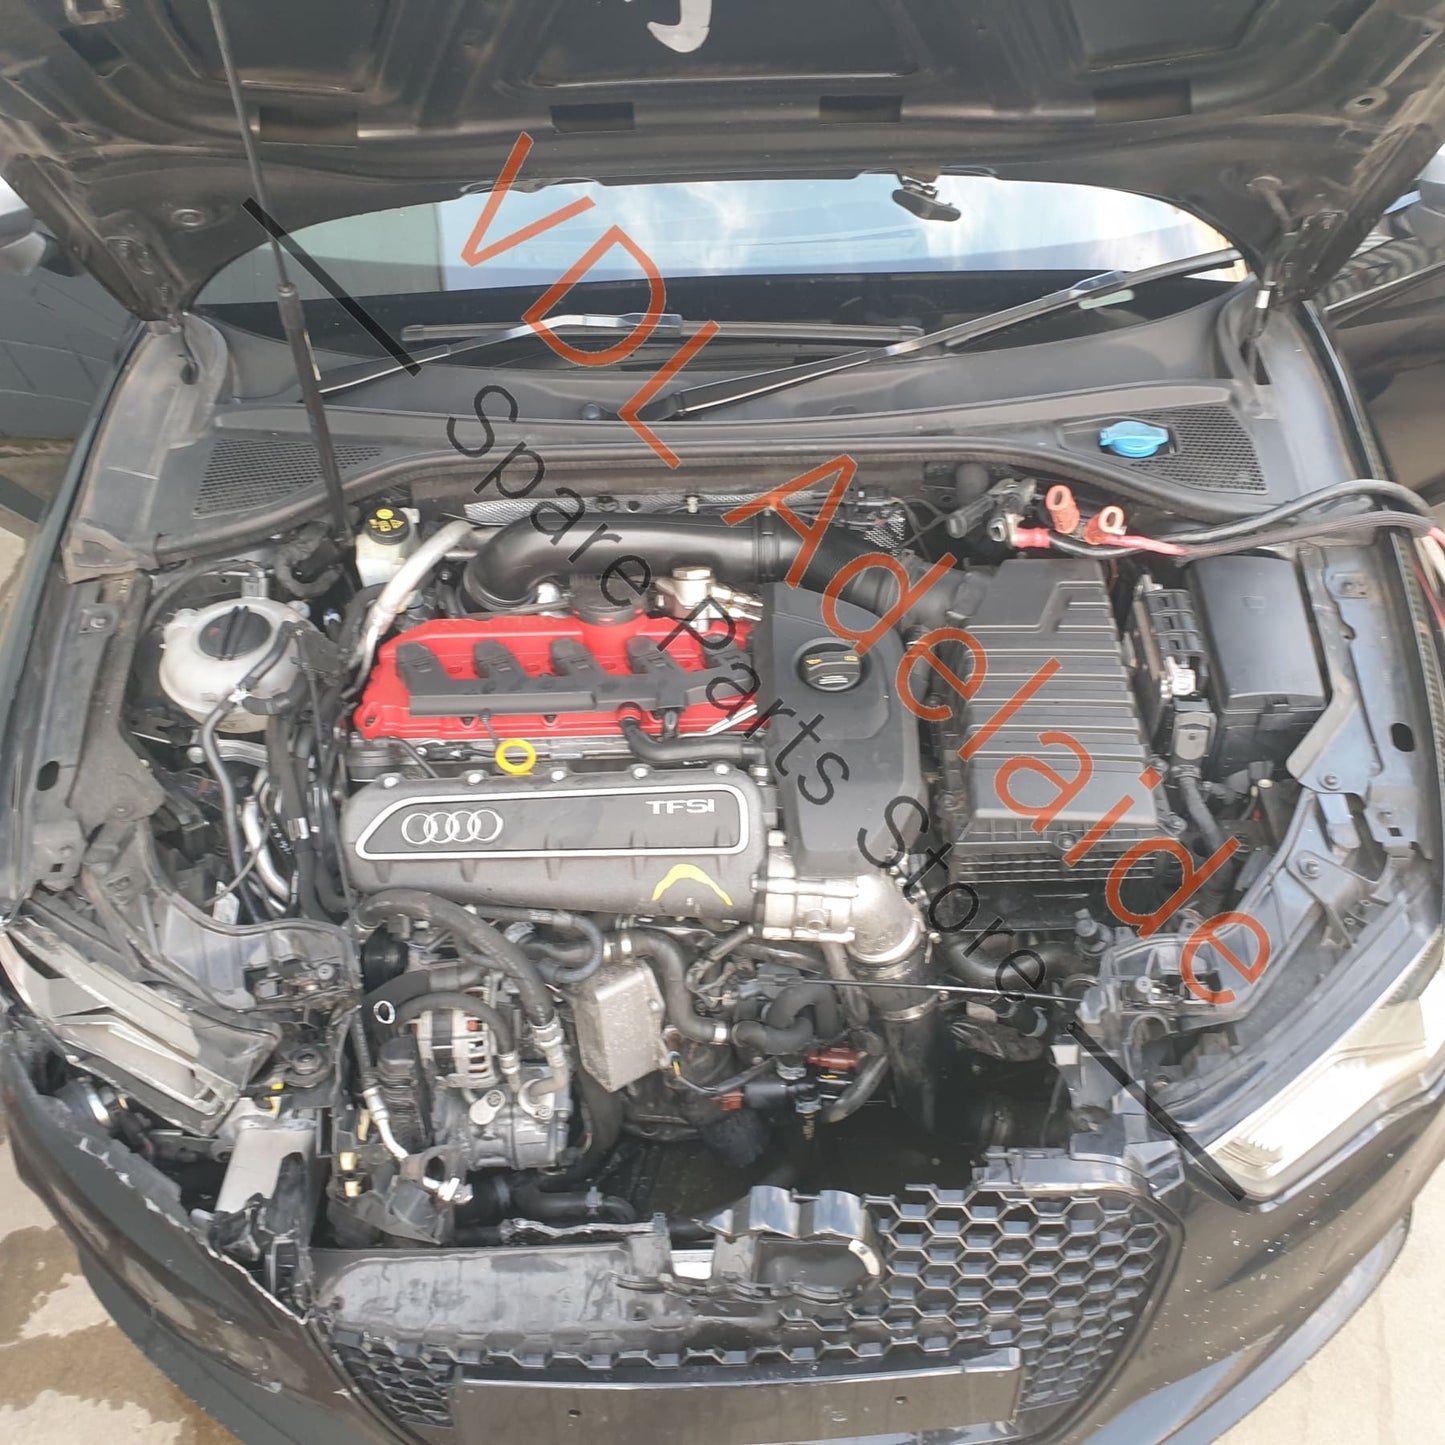 07K100032H Audi CZGB CZG RS3 5Cyl 2.5L 270kW Engine Complete Motor w Turbo Wiring etc